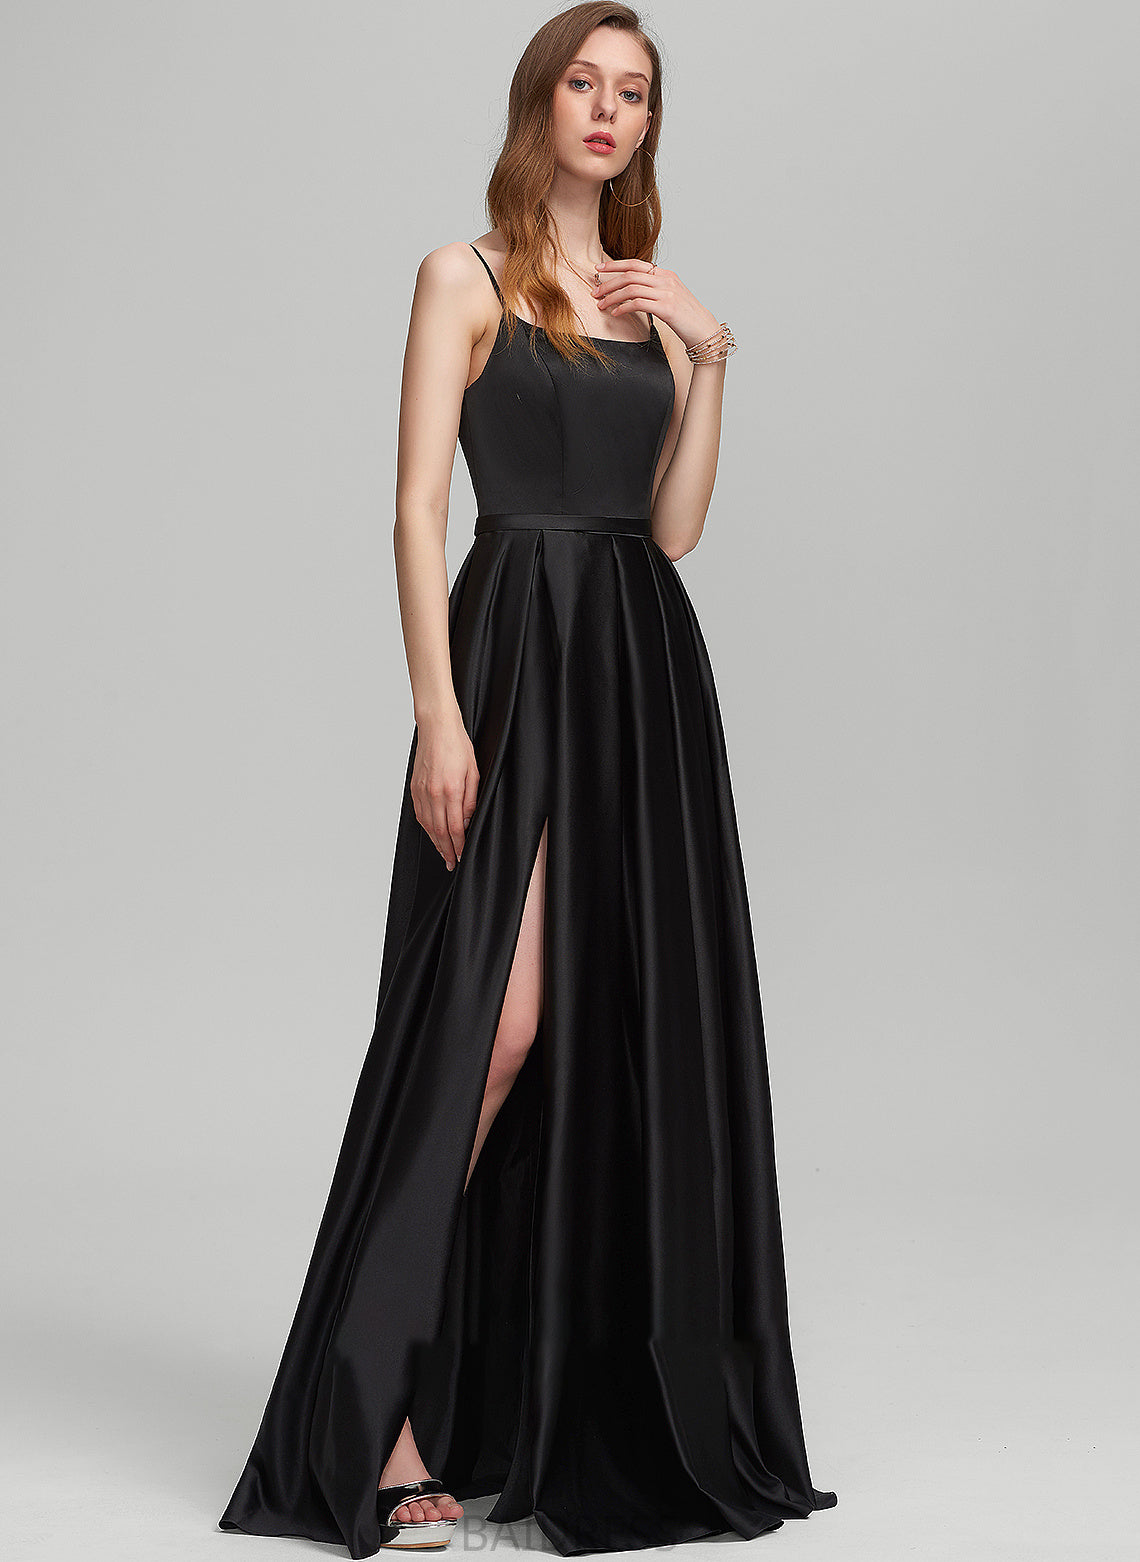 With Lilah Square Neckline Front Pockets A-Line Floor-Length Split Prom Dresses Satin